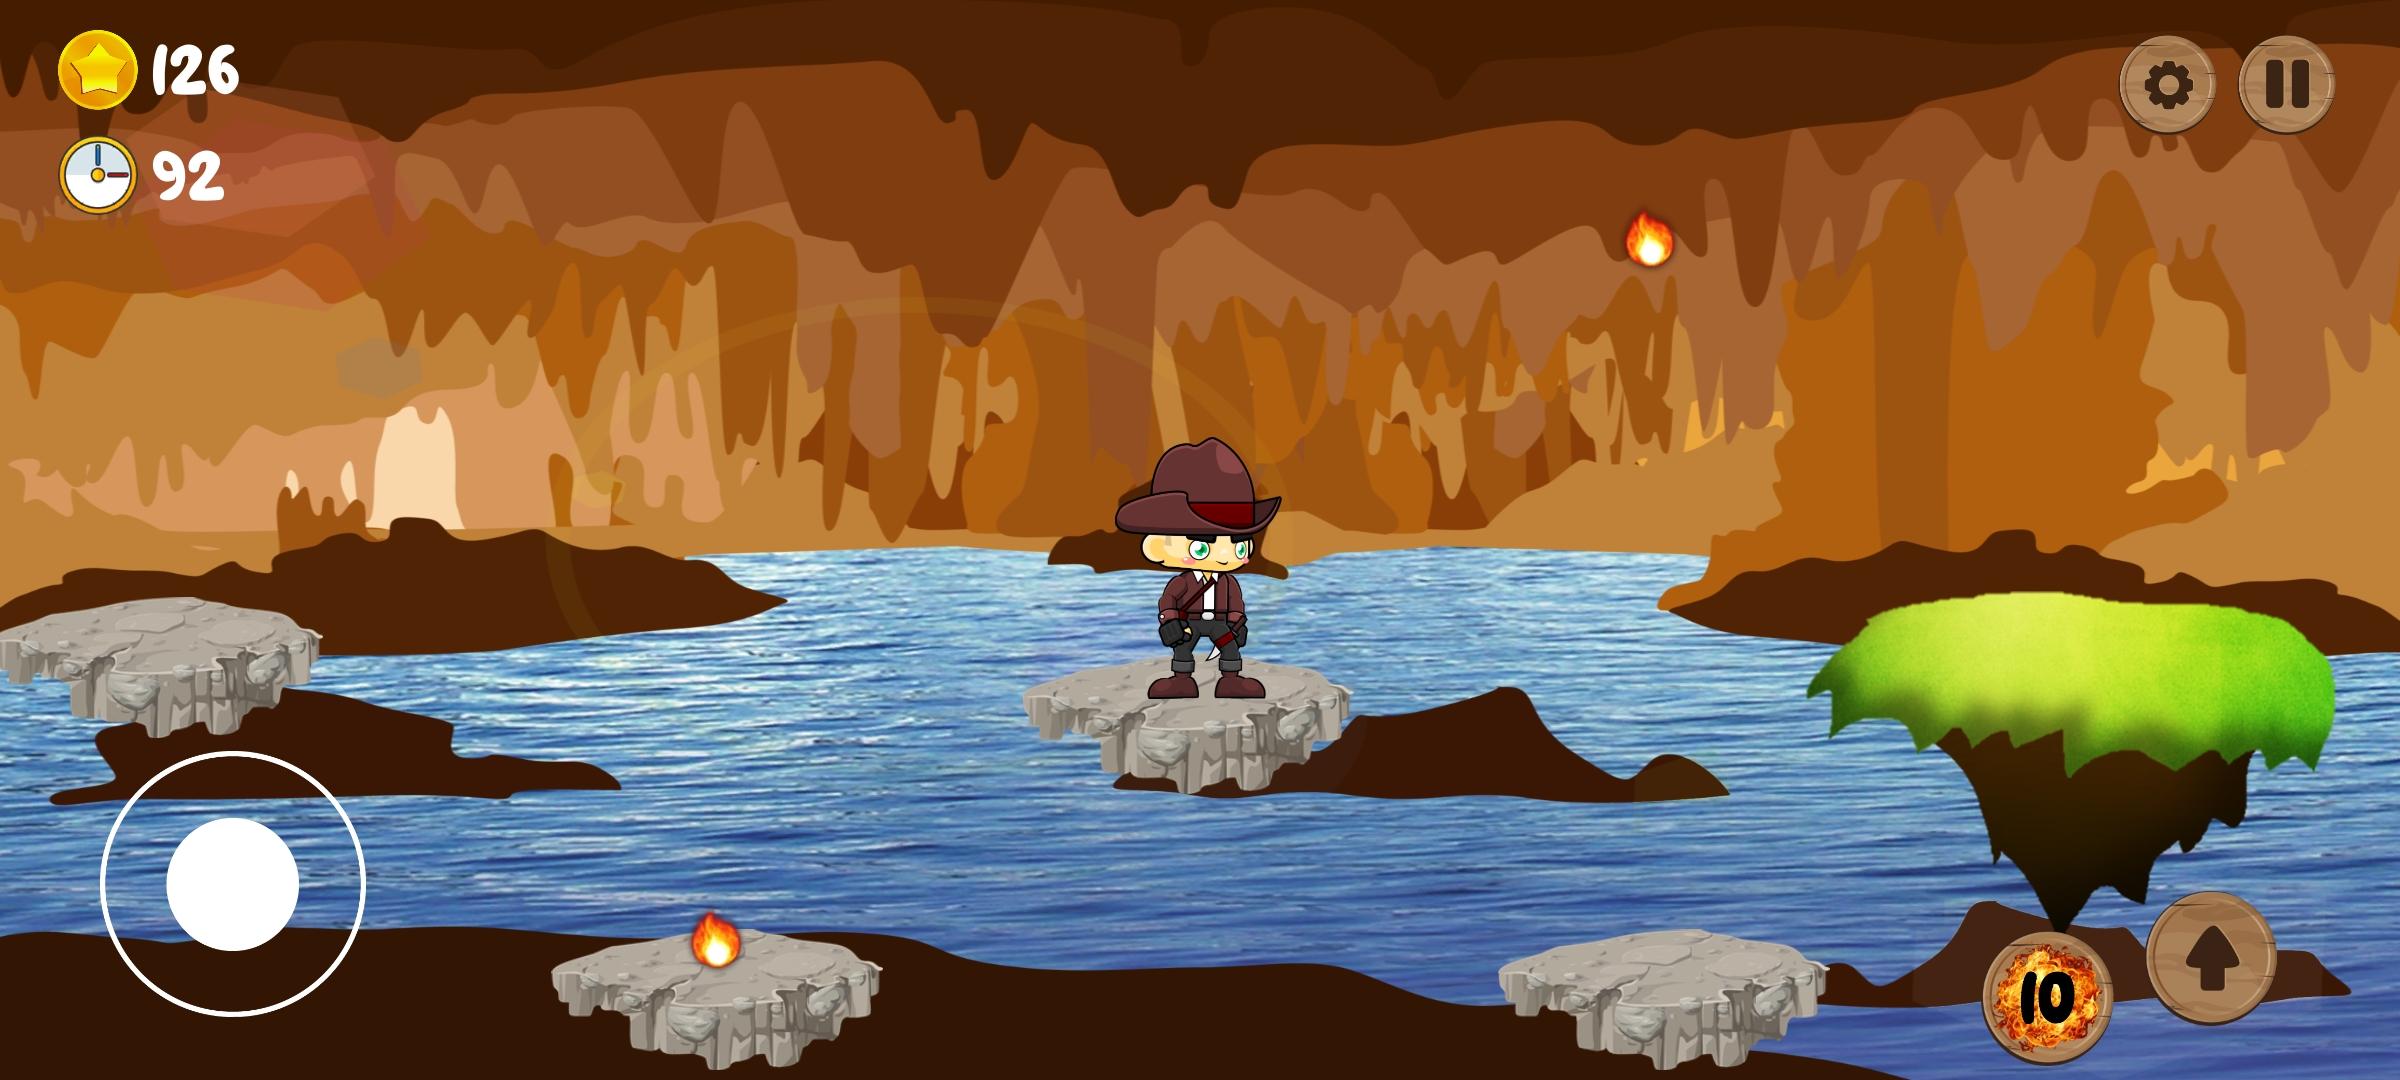 RFG - Adventure Boy 1.6 Screenshot 2